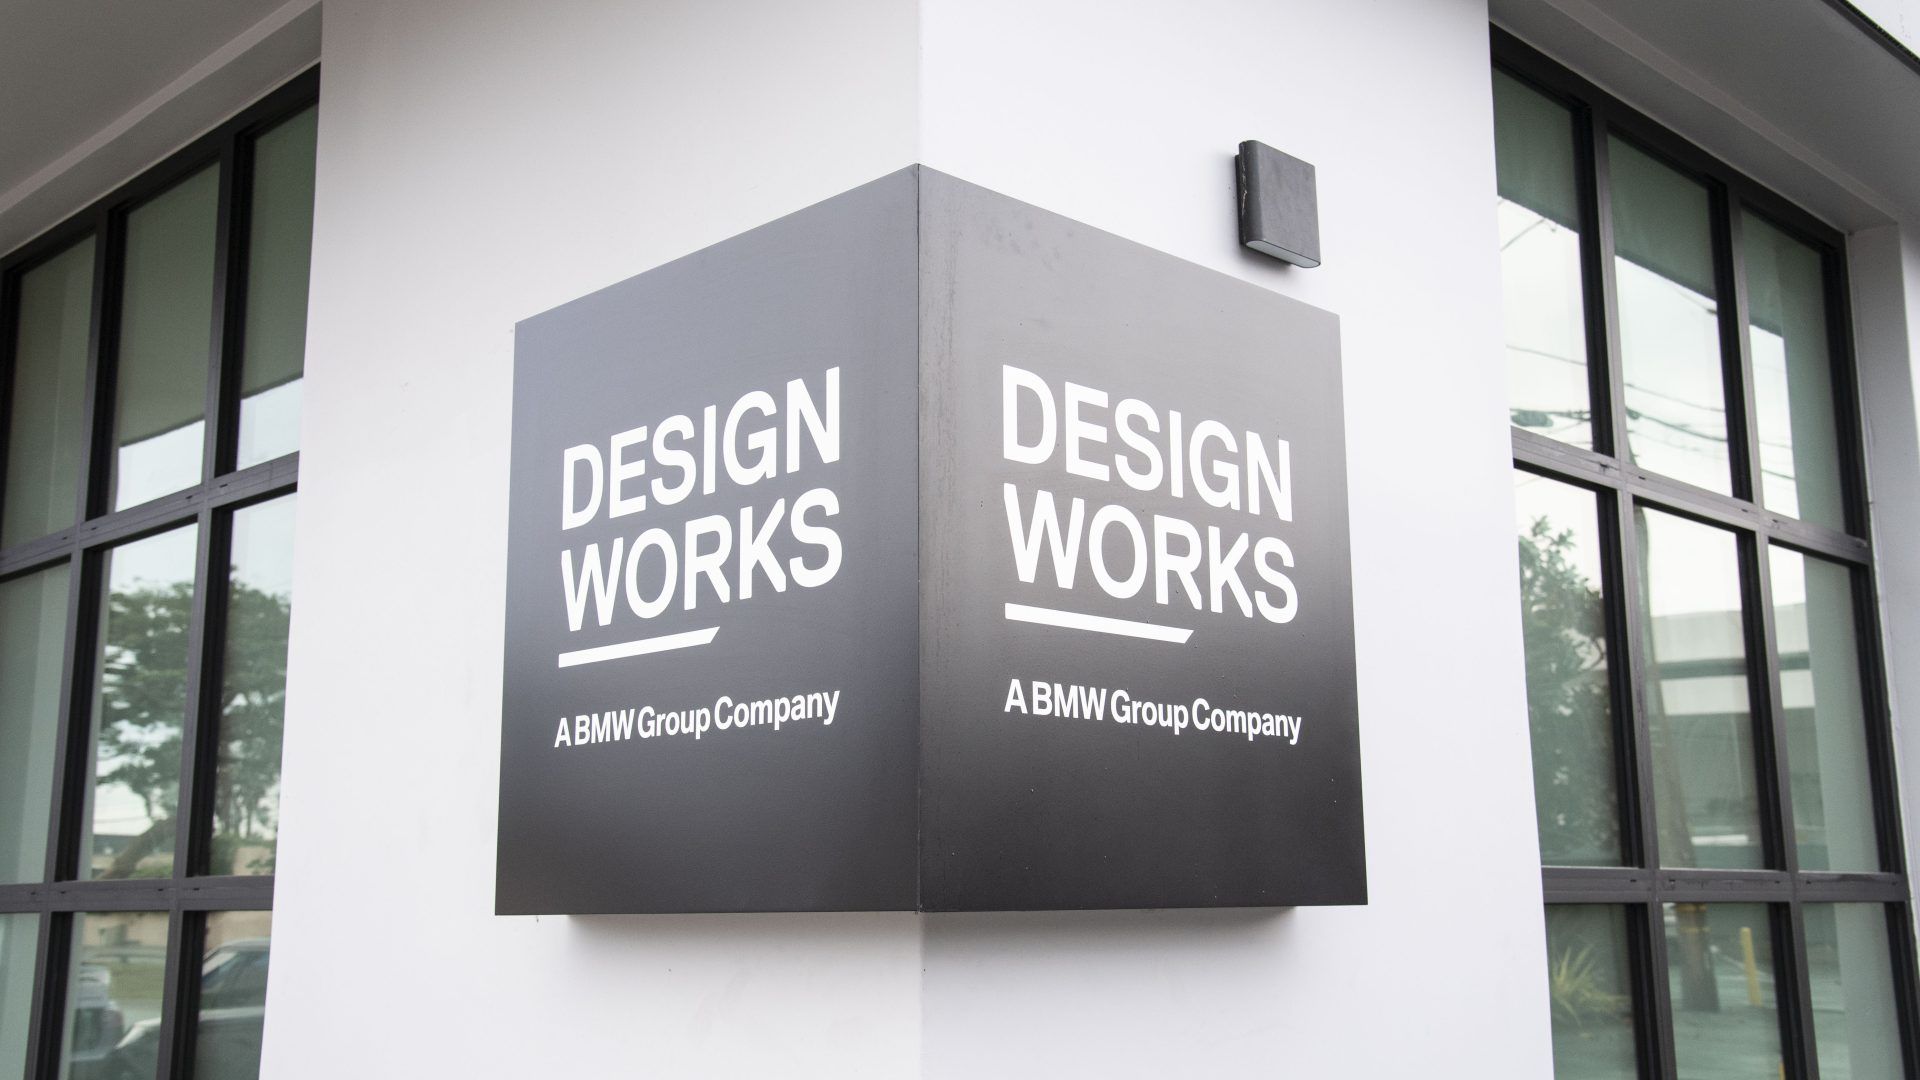 Designworks logo signage.